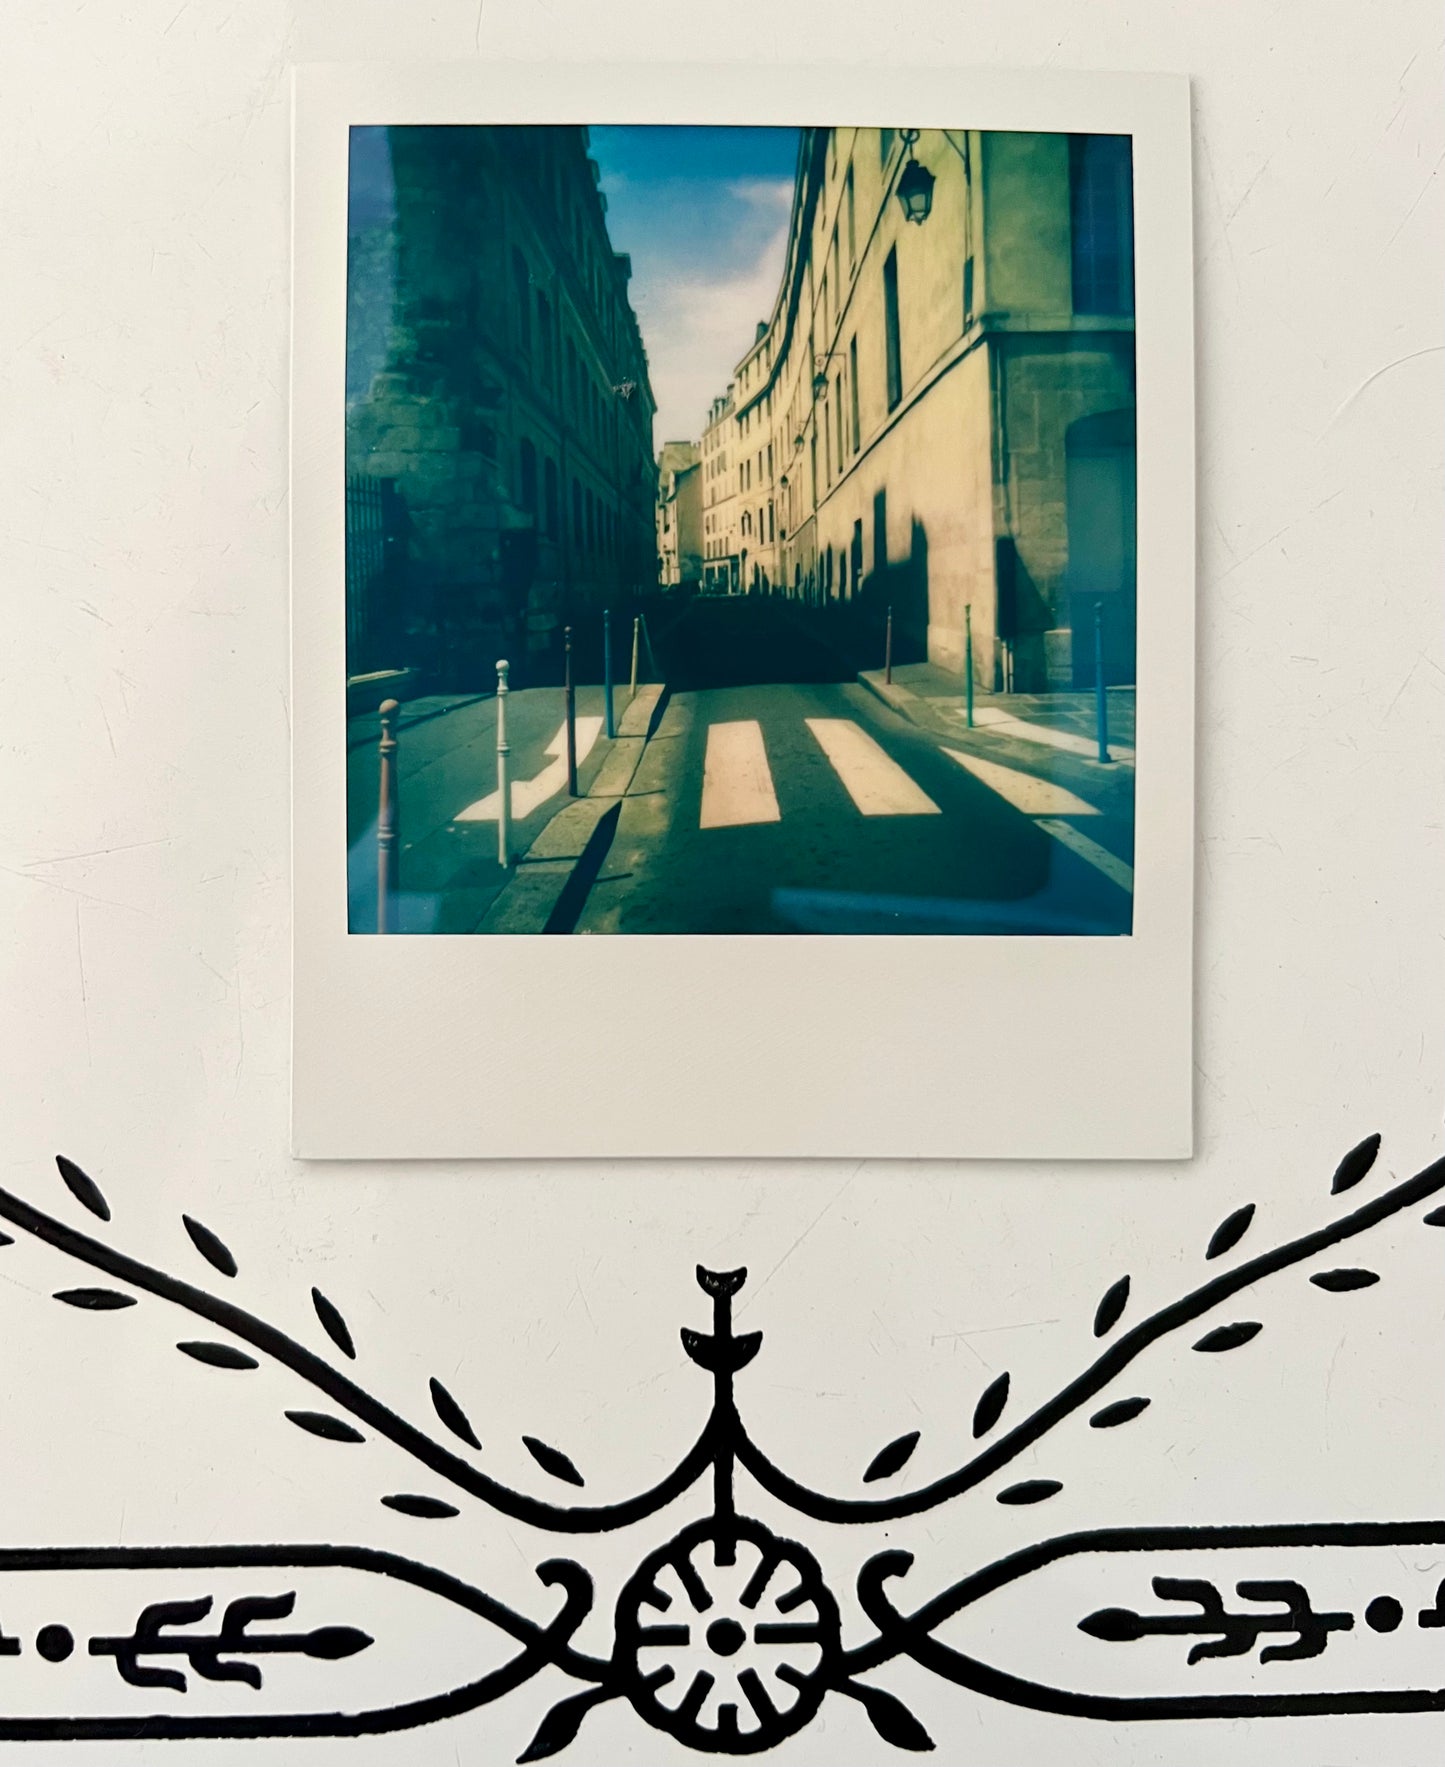 paris polaroid / street photography captures